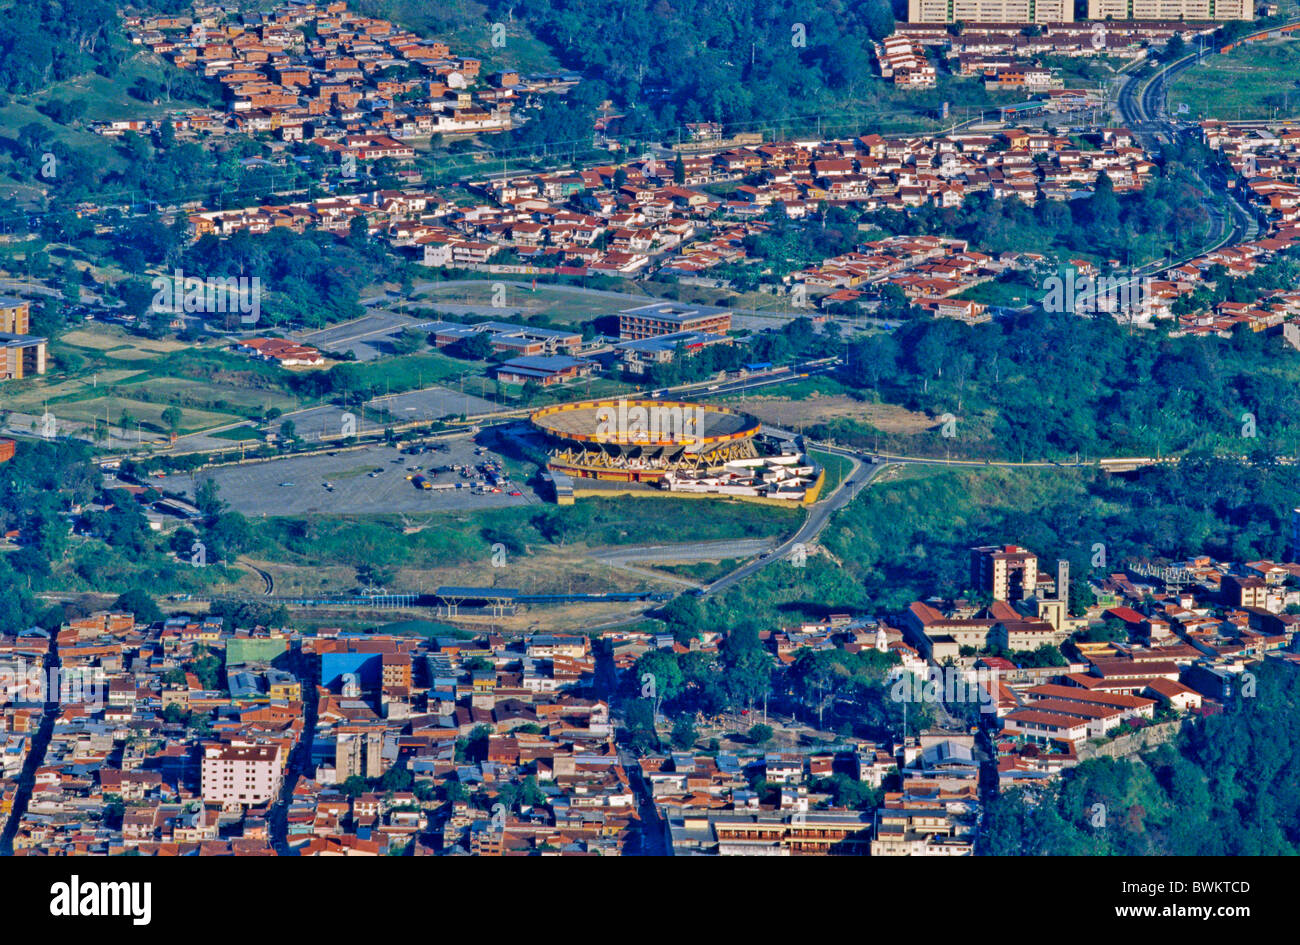 Venezuela South America Merida Plaza De Toros City Town Aerial view Andes South America Stock Photo